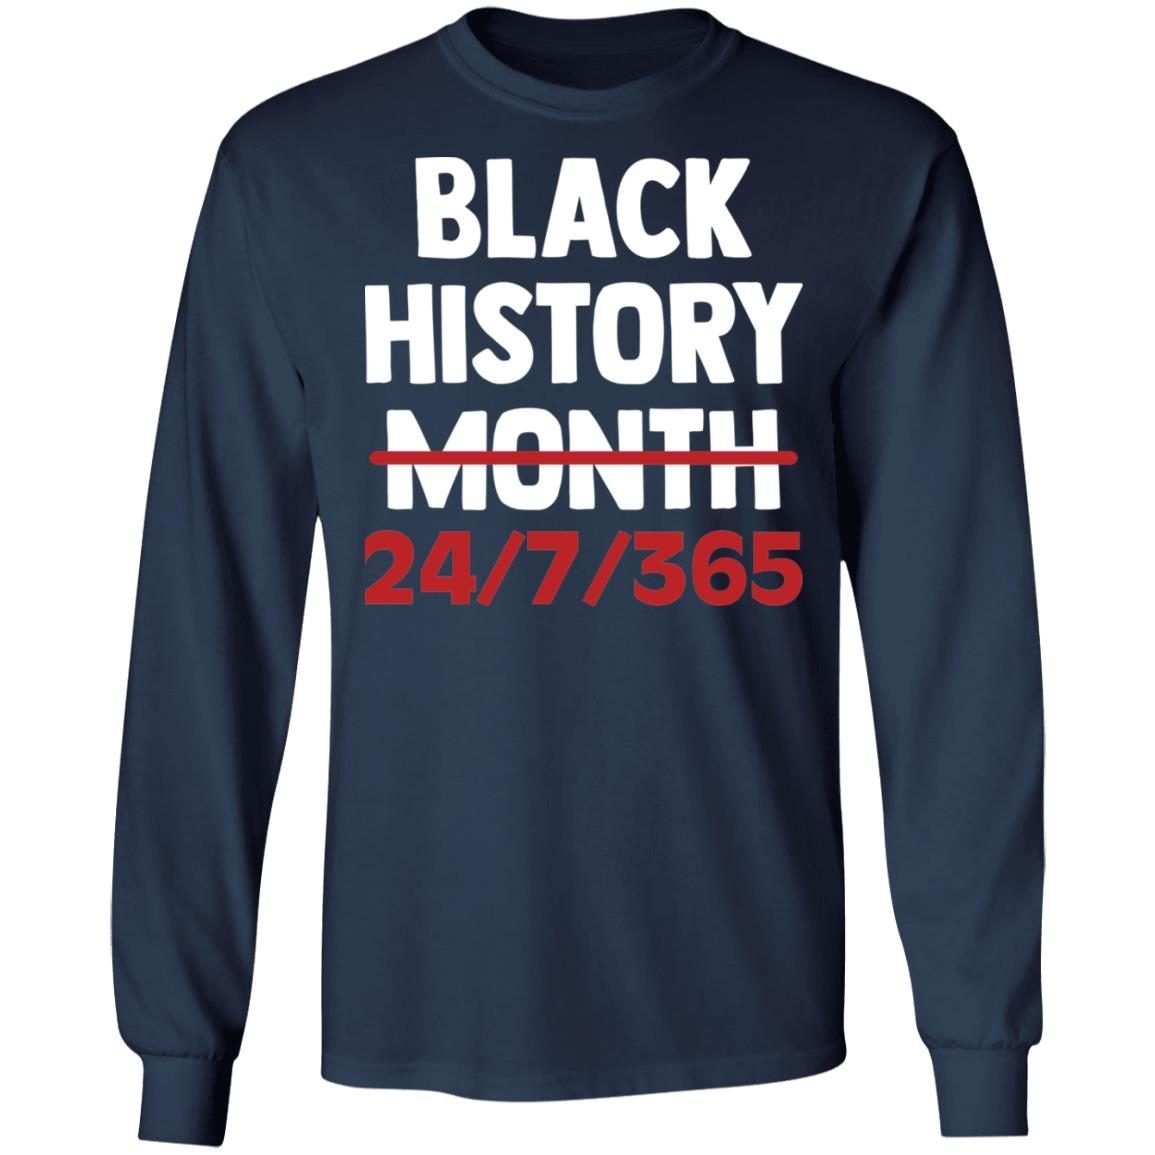 Black history month 24/7/365 shirt 3